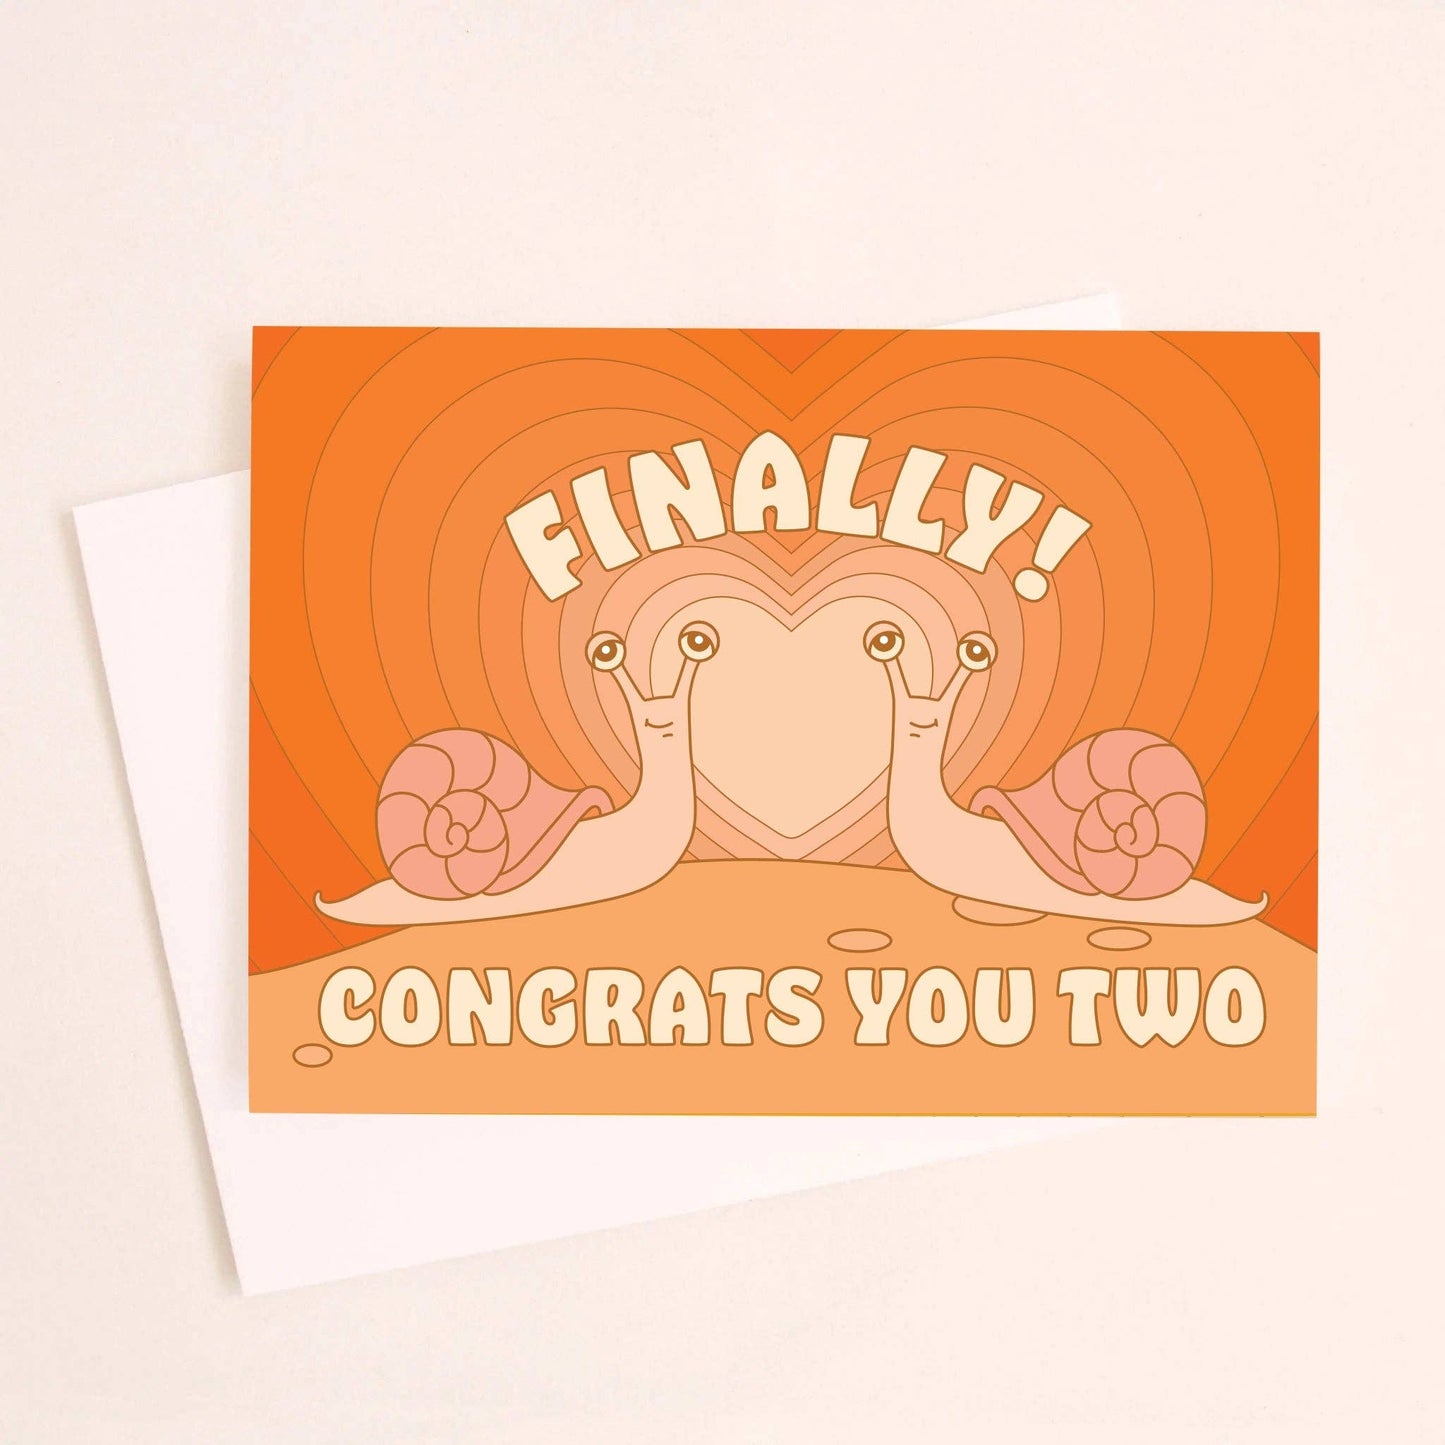 Finally! Congrats You Two Snails Card